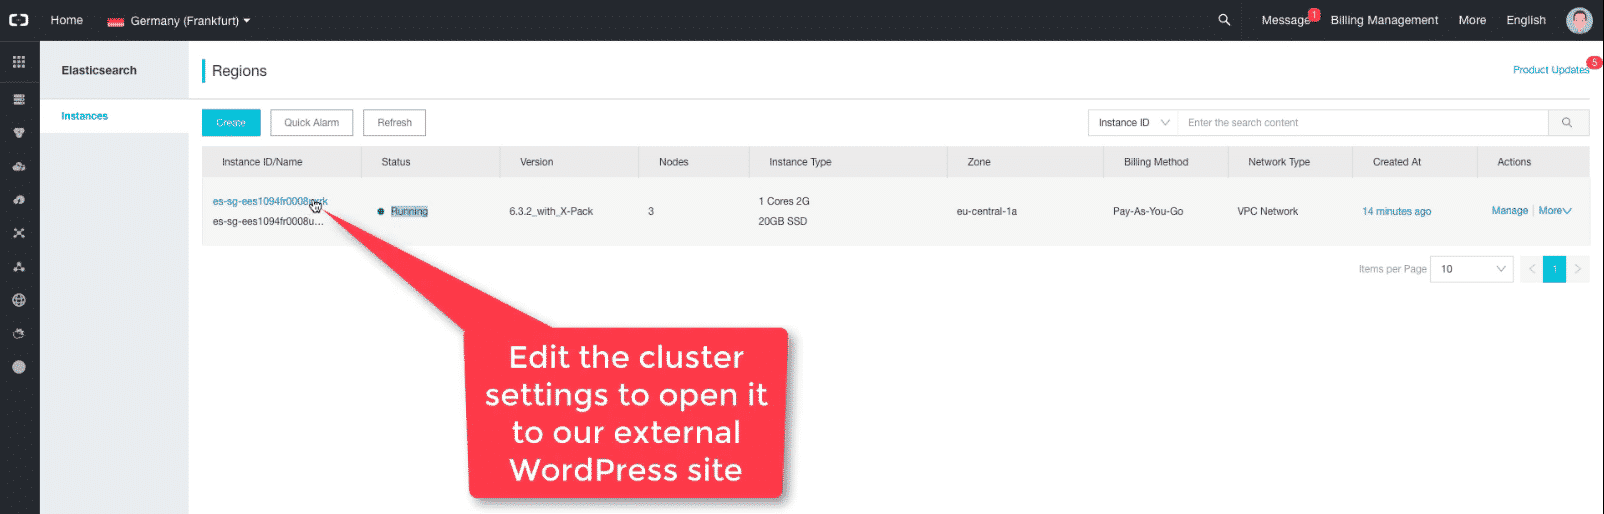 Alibaba Cloud Elasticsearch: open cluster settings